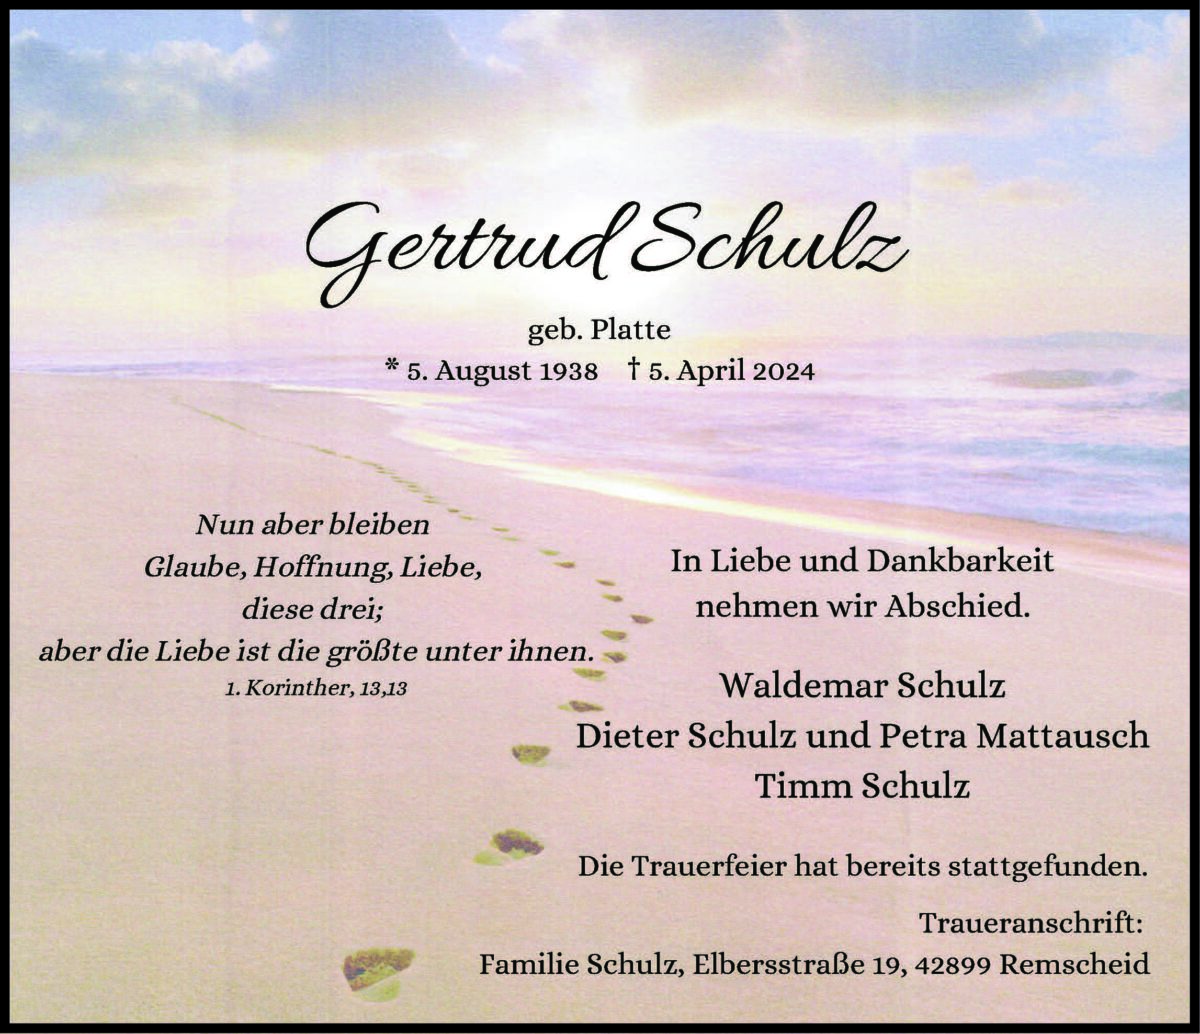 Gertrud Schulz geb. Platte